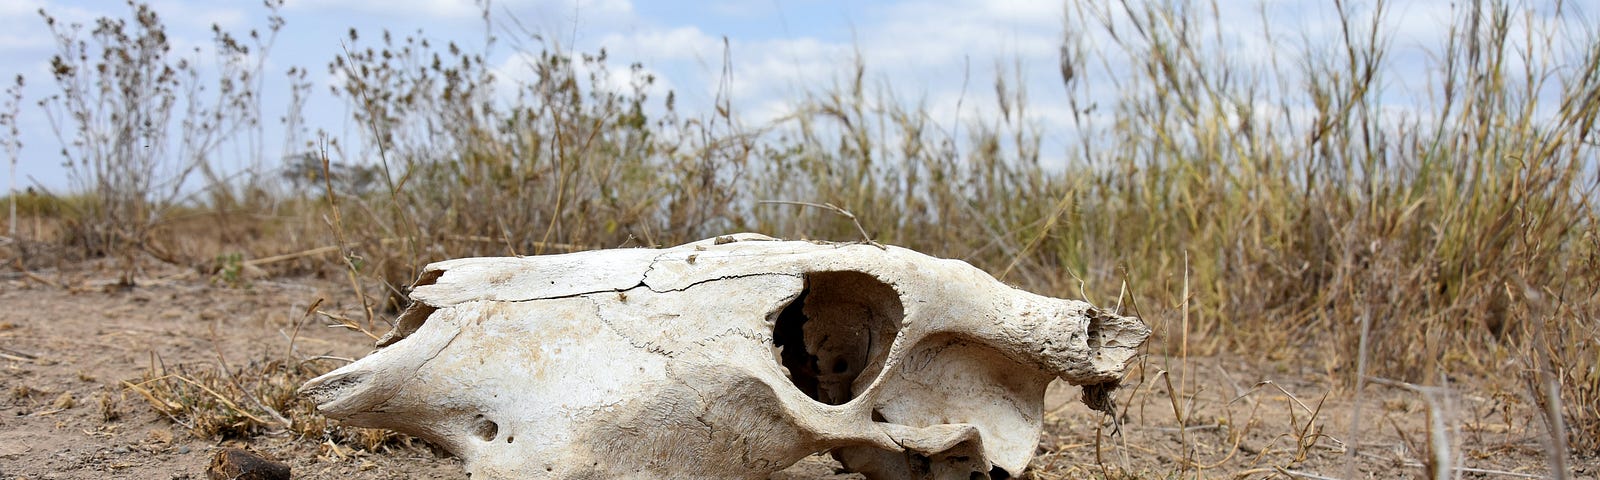 Animal Skull in amongst dust and dry grass.